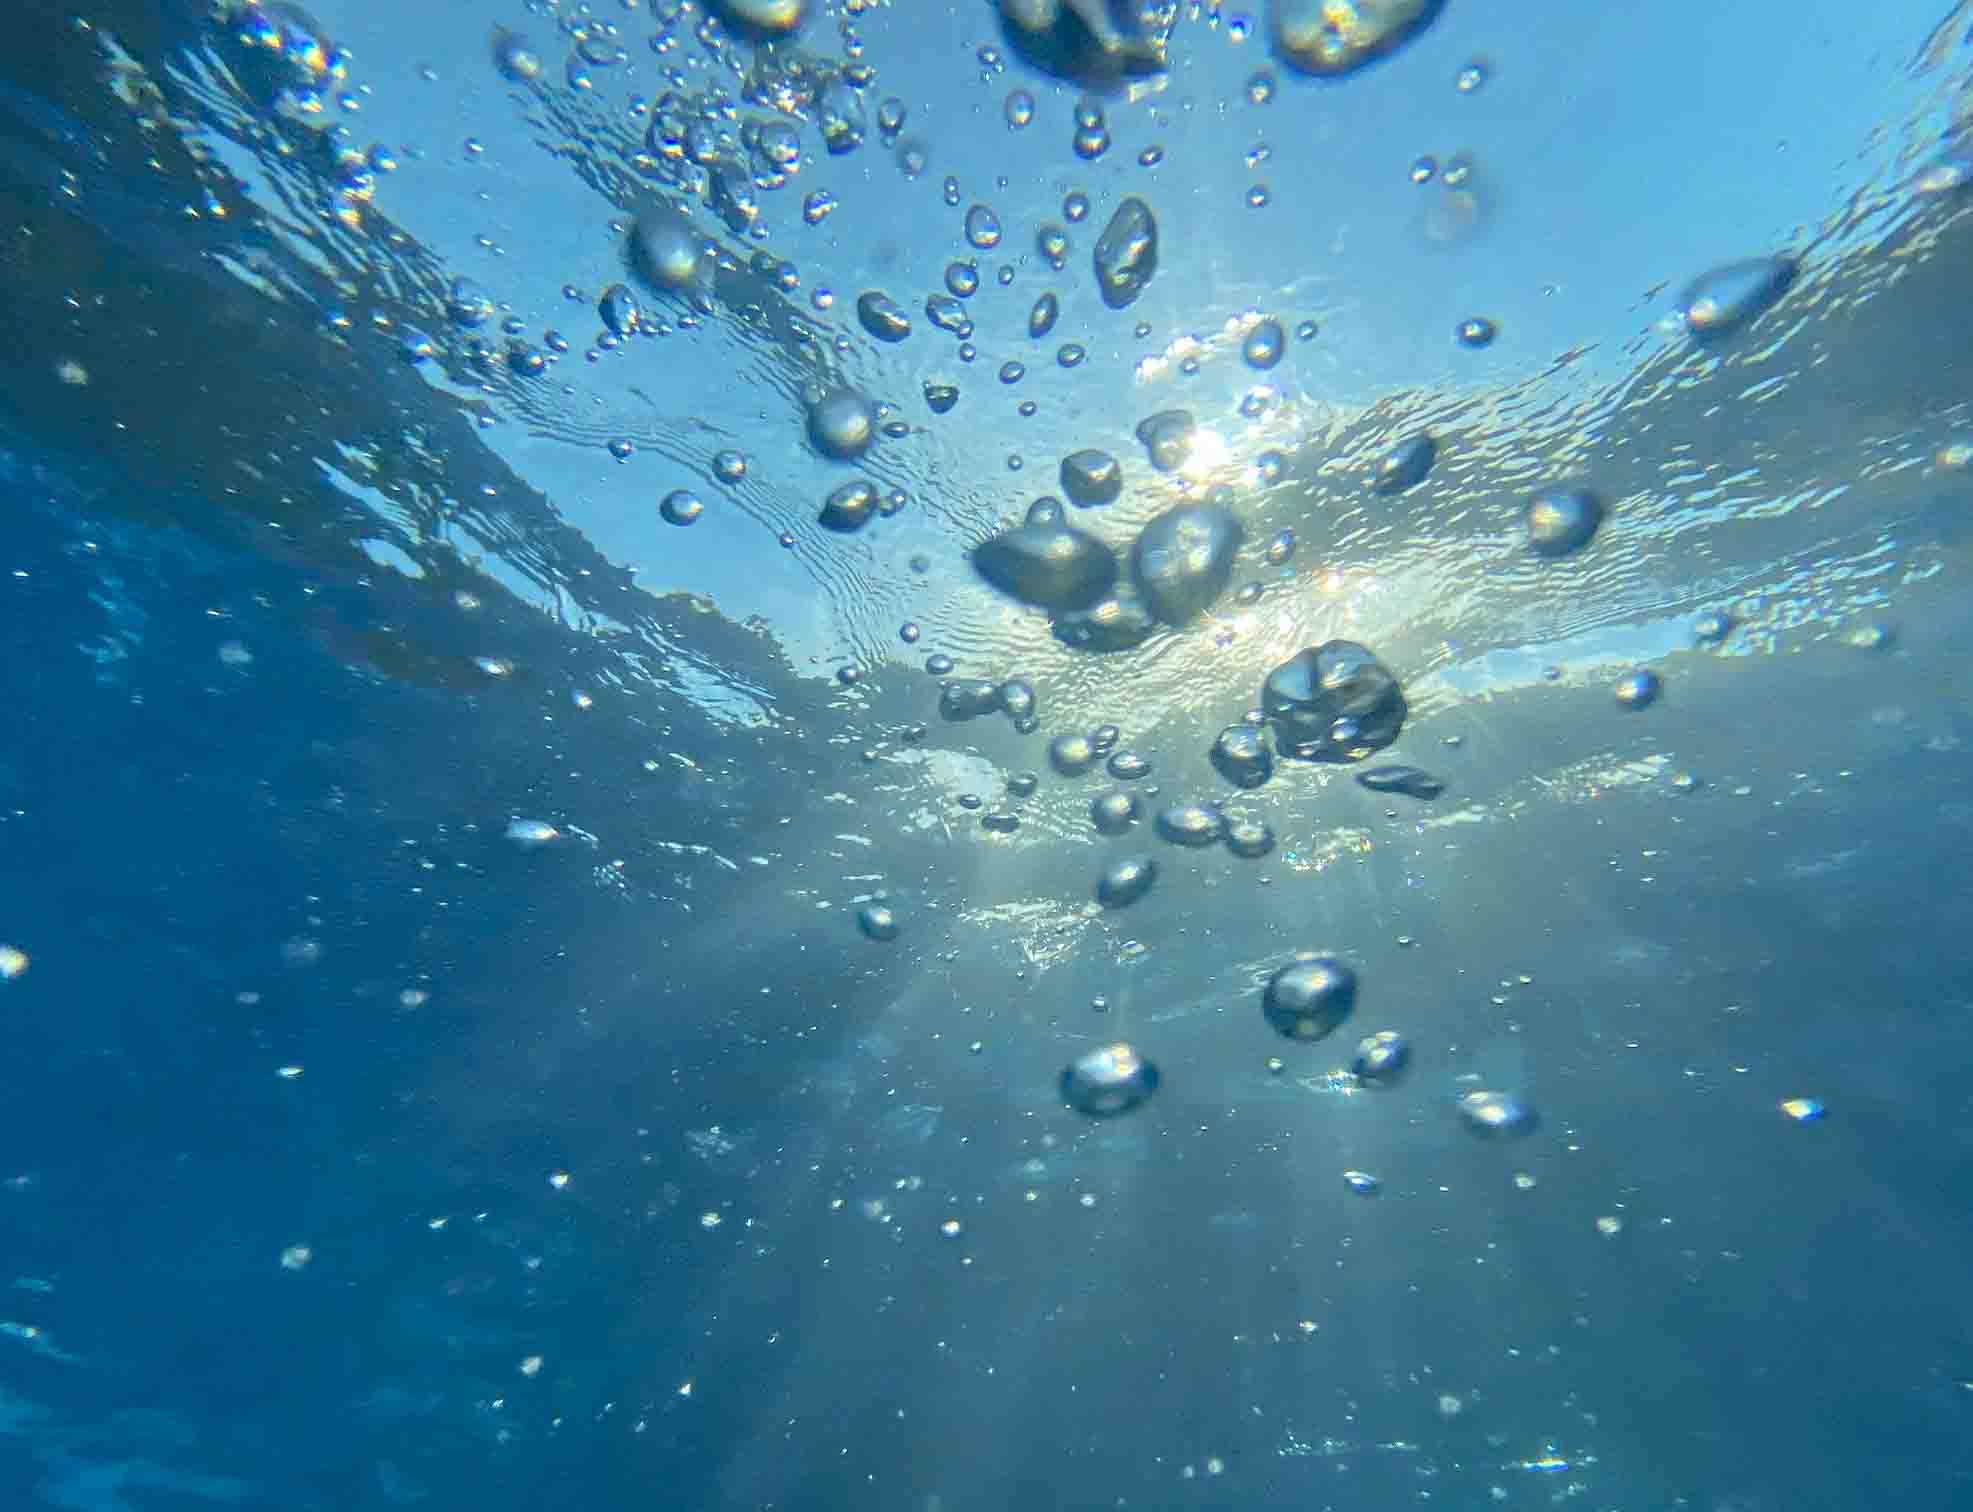 dissolved oxygen bubbles under water